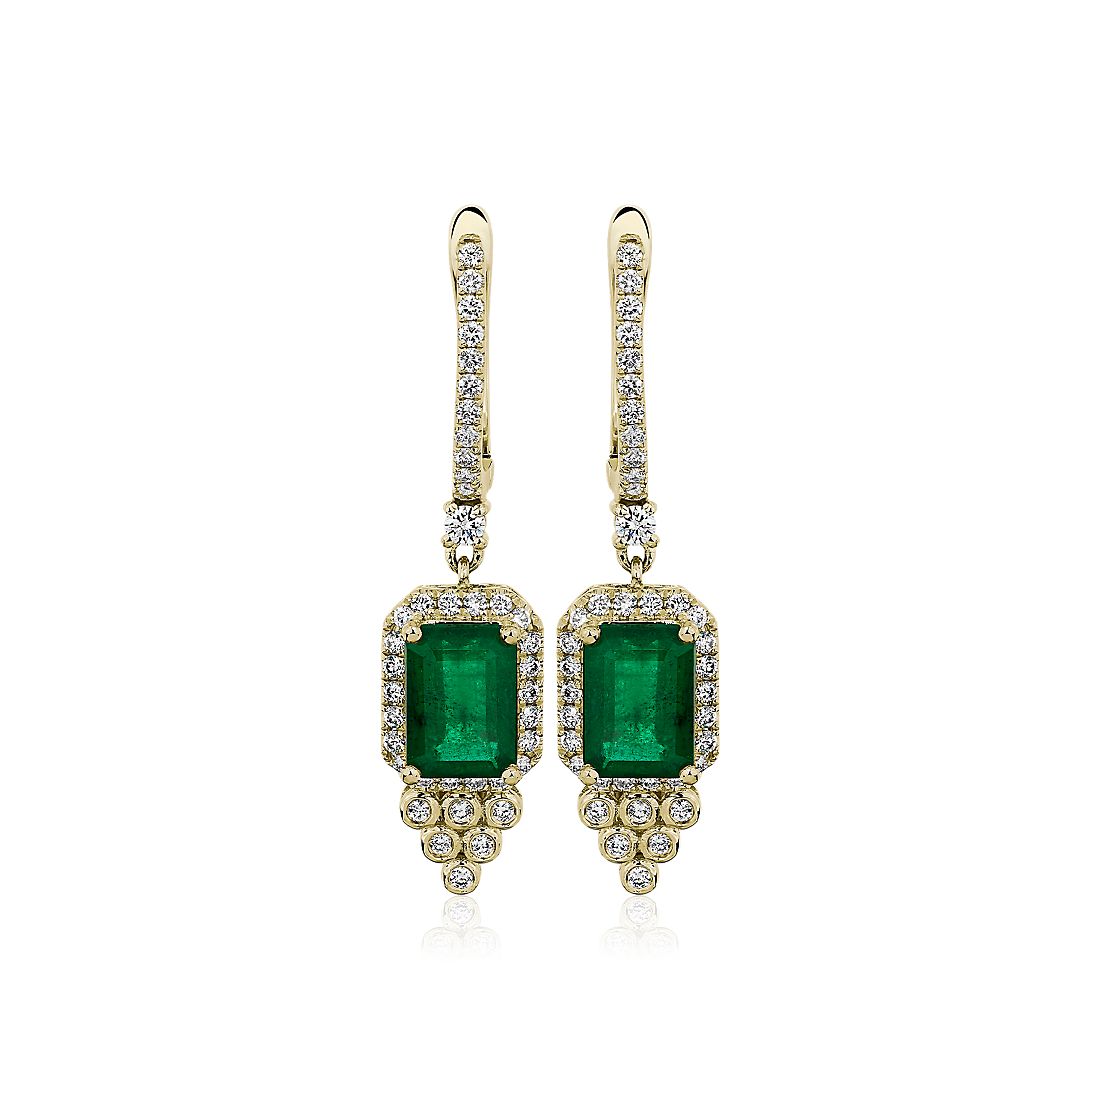 Emerald-Cut Emerald and Diamond Drop Earrings in 14k Yellow Gold